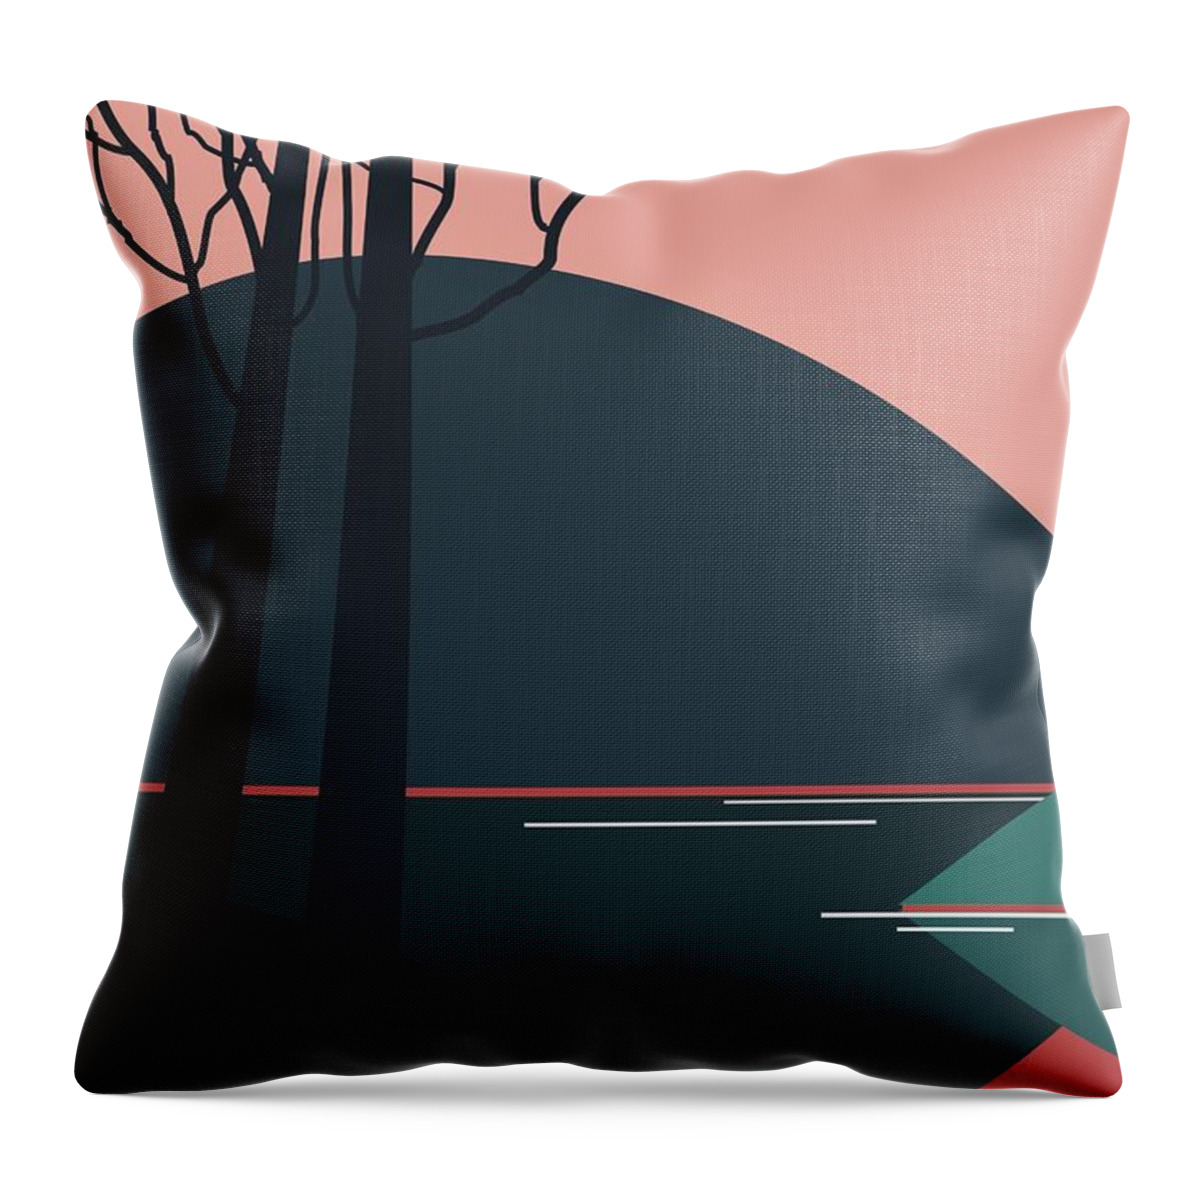 Trees Throw Pillow featuring the digital art Evening light by Fatline Graphic Art